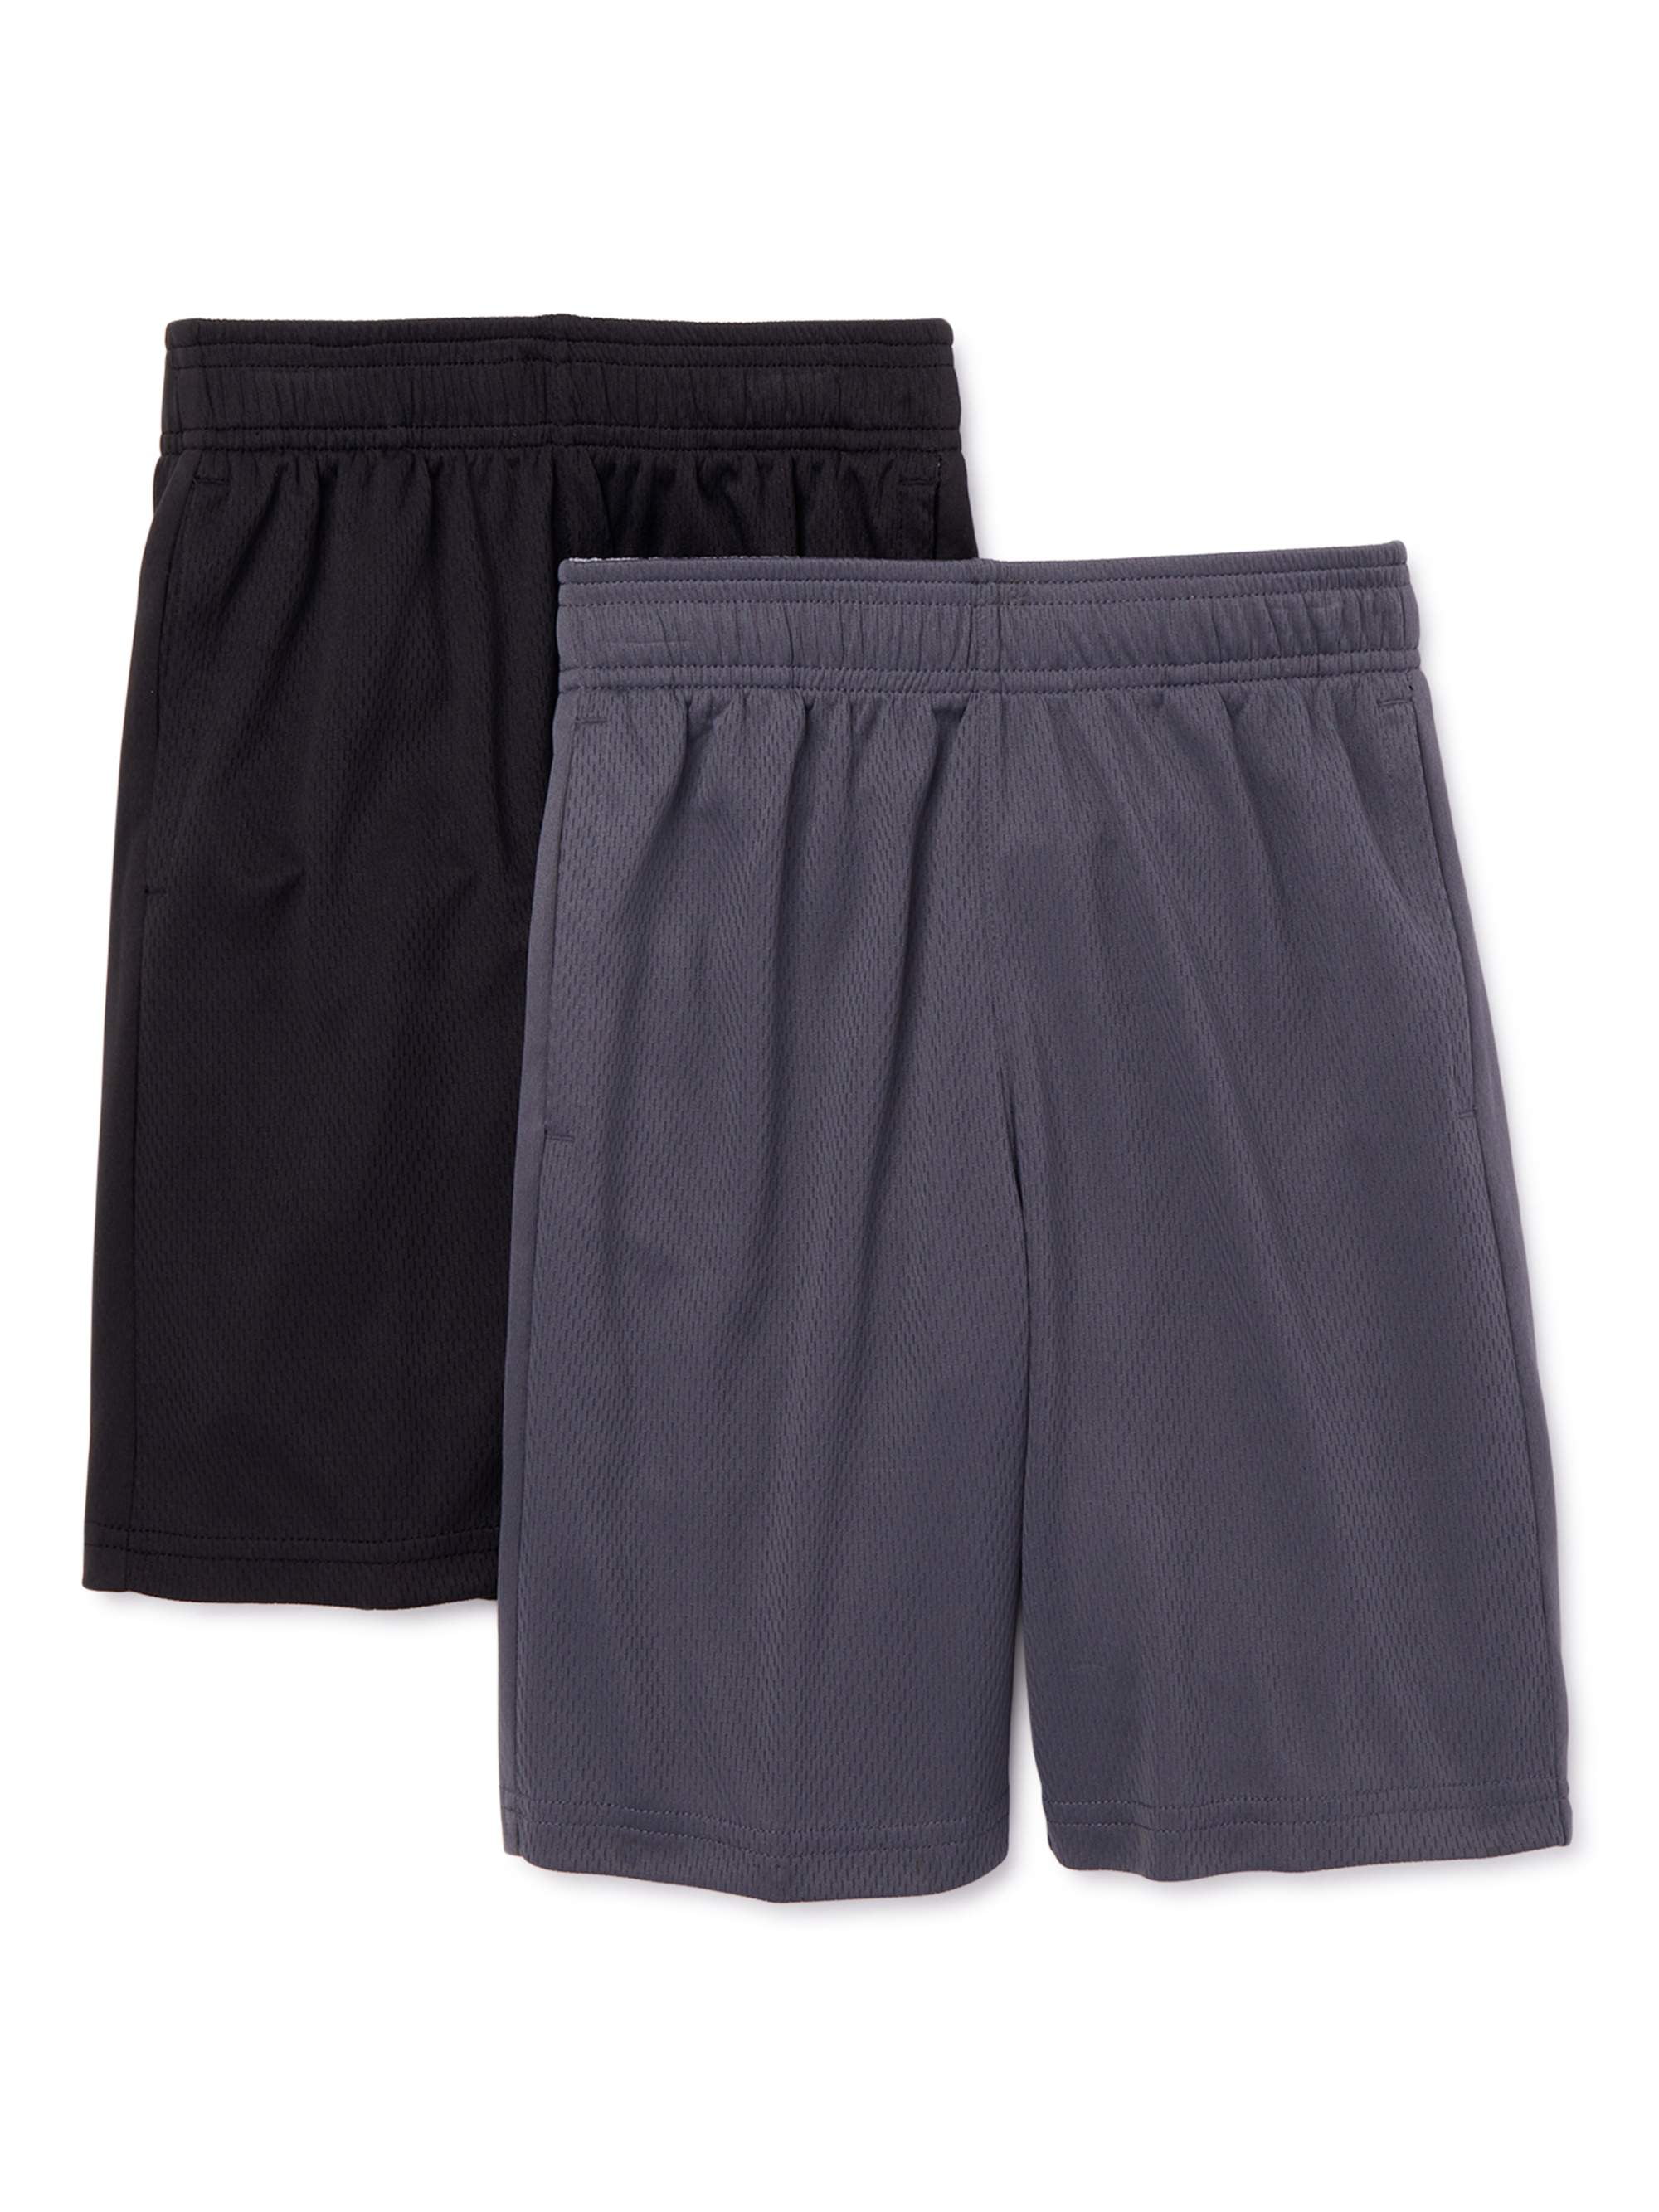 Athletic Works: Buy Shorts, Shoes, Pants, Shirts & Capris for Men